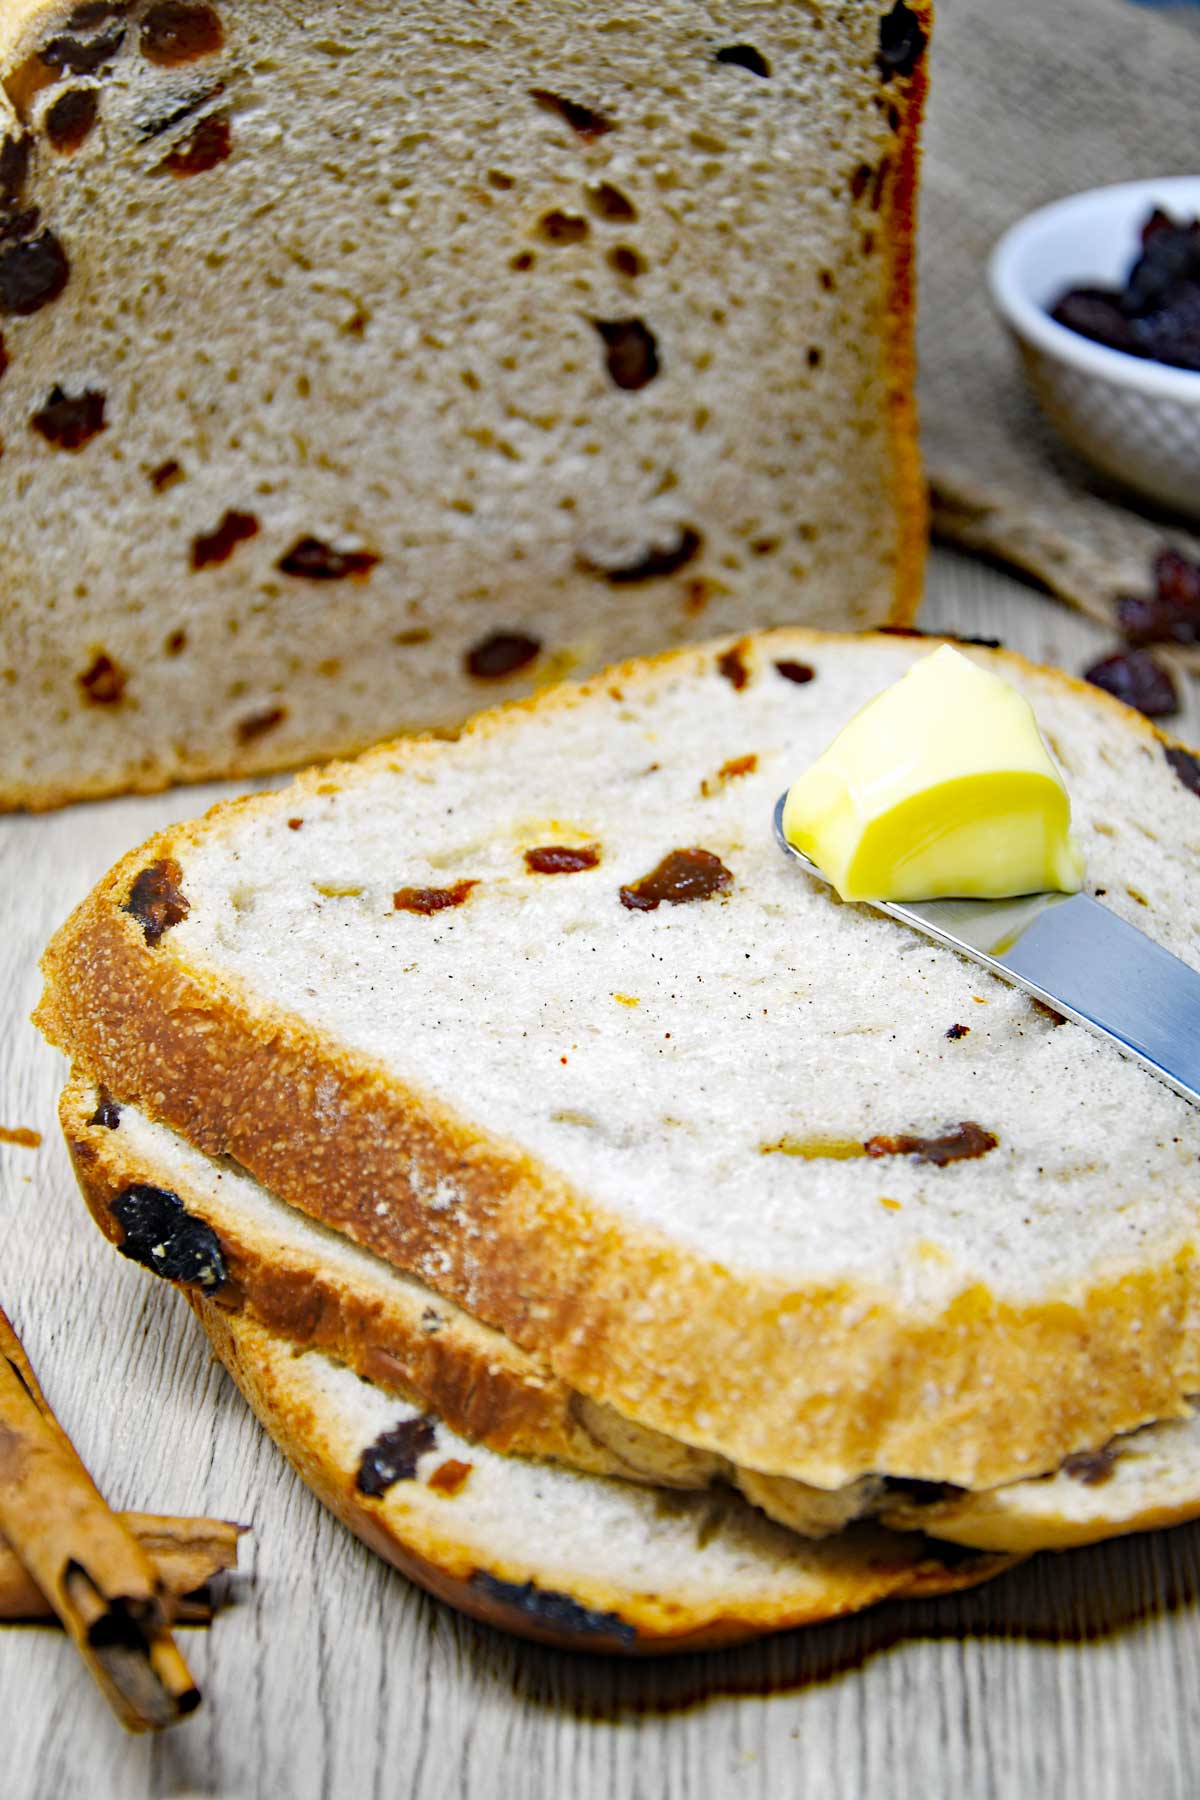 Cinnamon raisin bread loaf and slices.